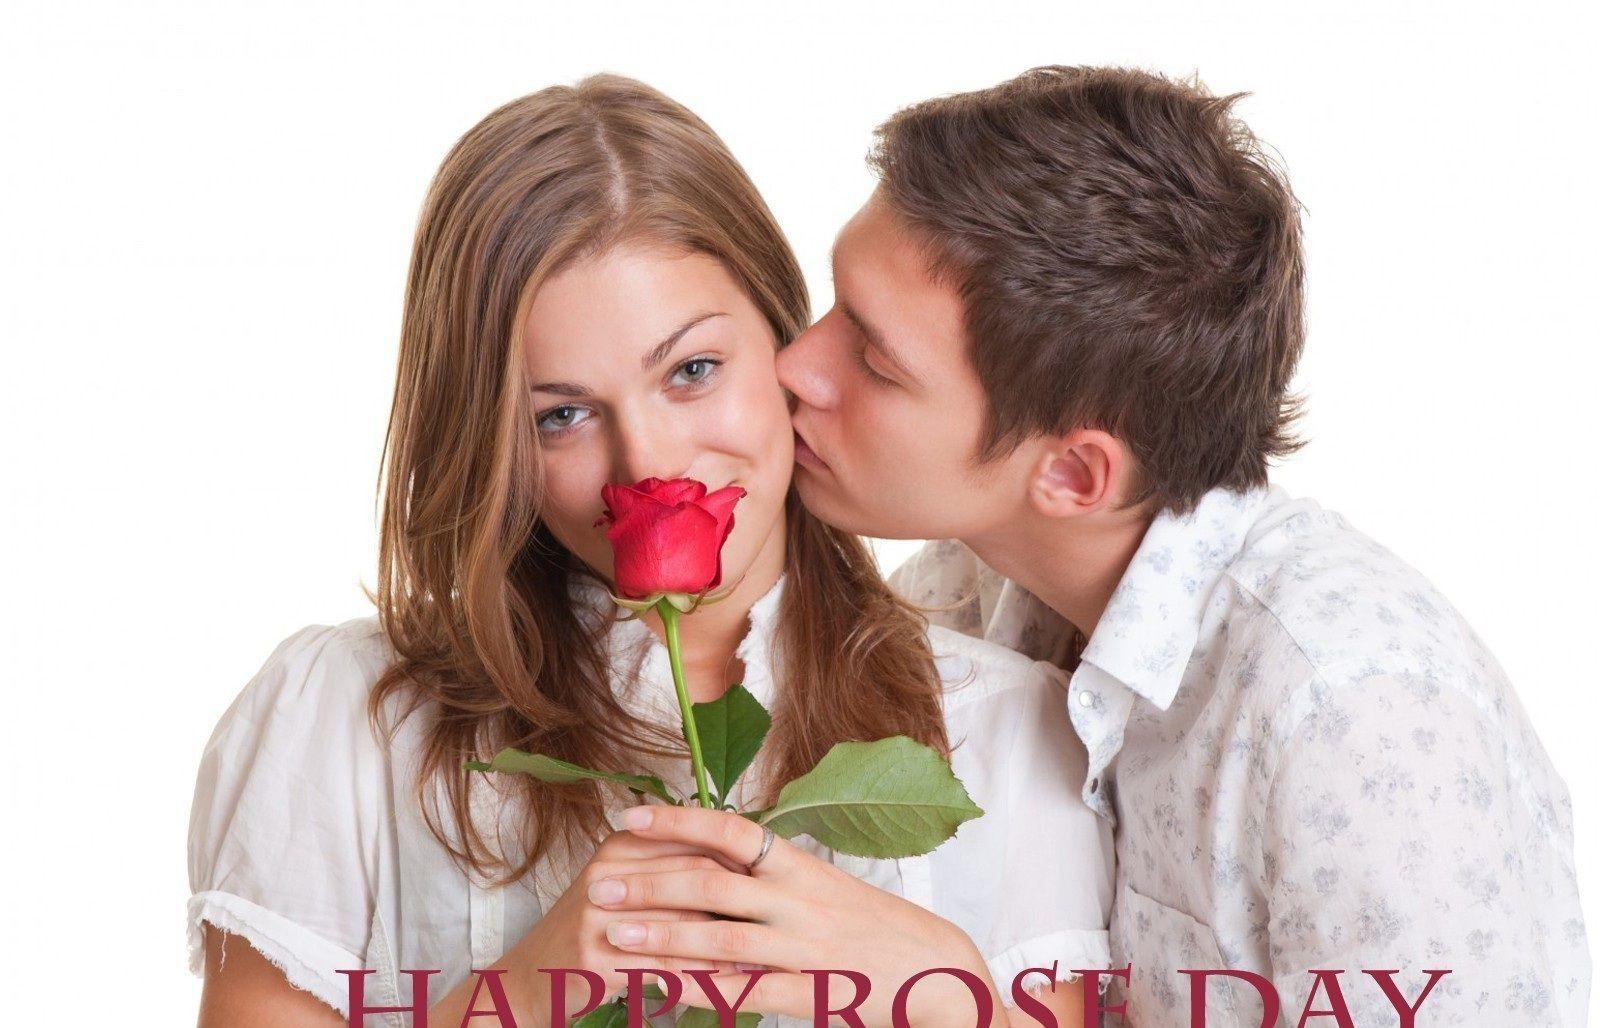 Happy Rose Day 2016 HD wallpaper Valentine&;s Day 2016